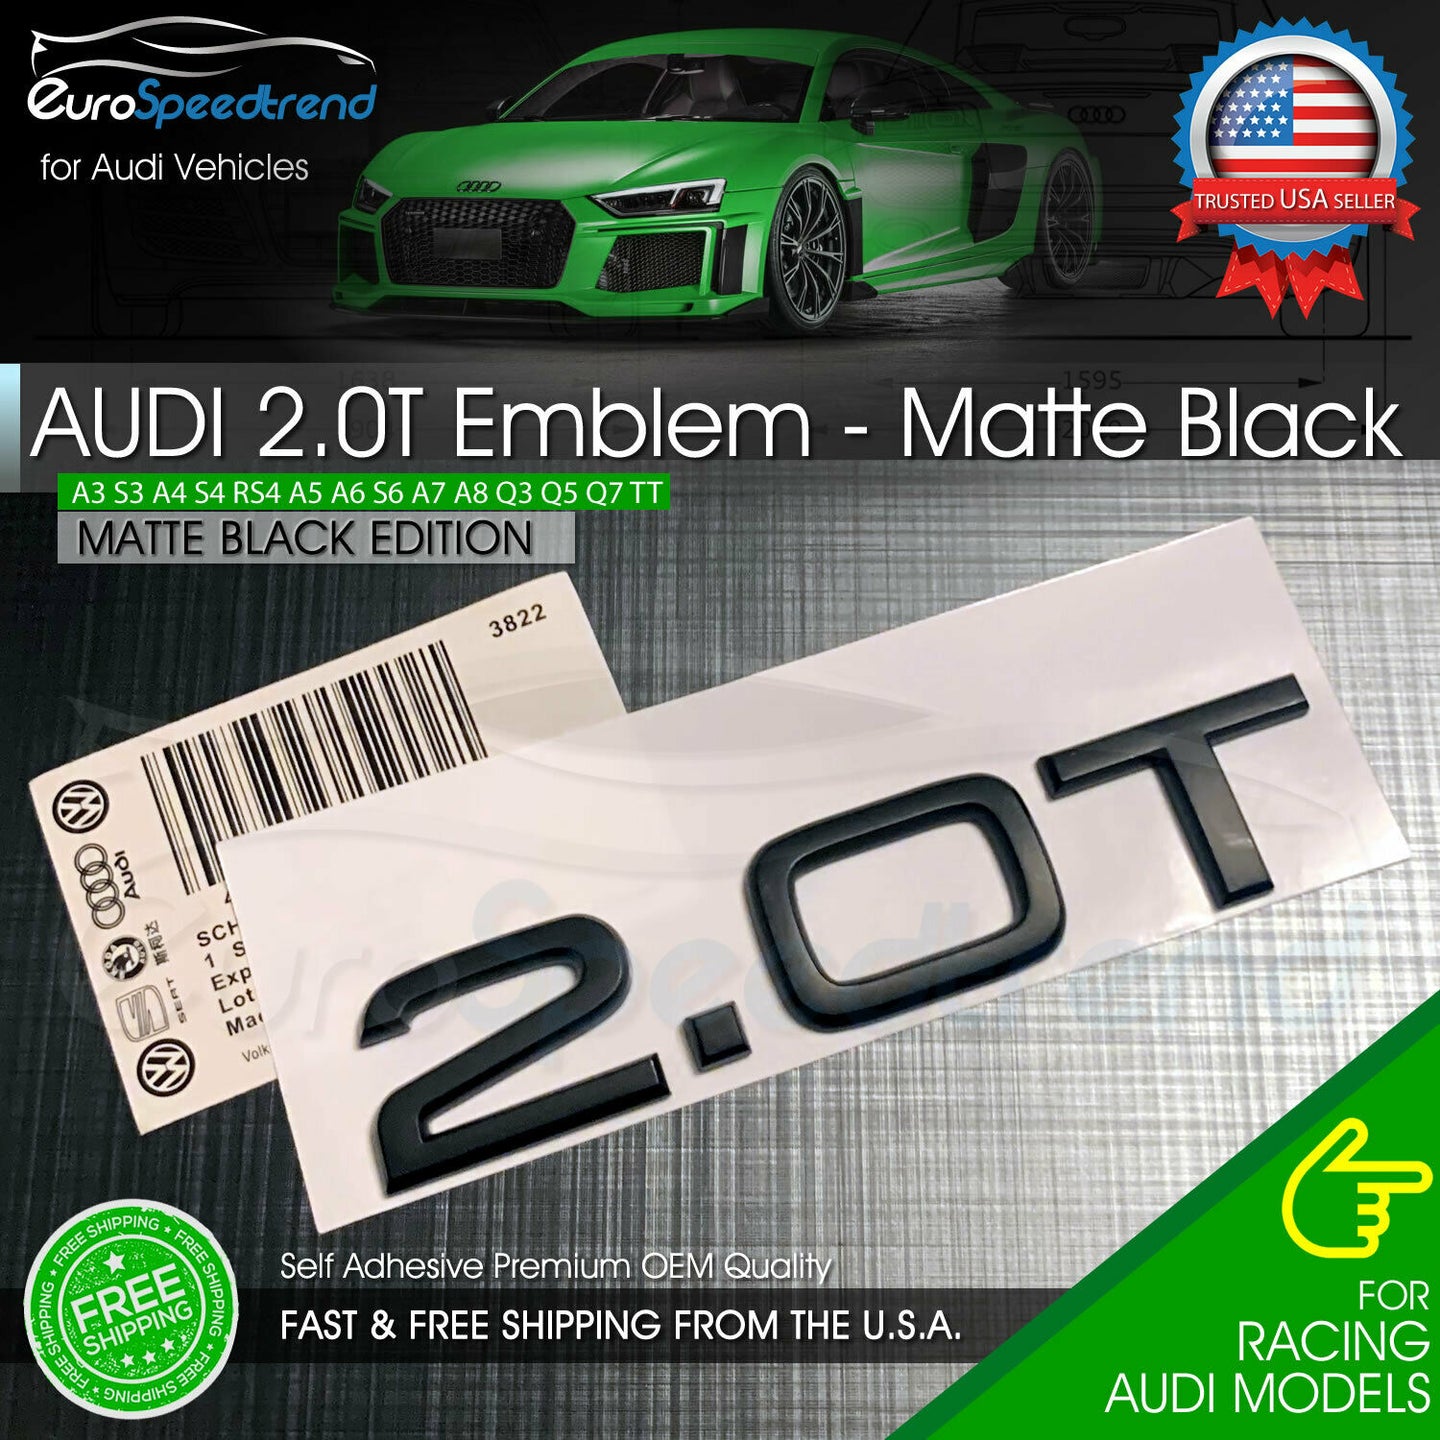 2.0T Emblem Matte Black 3D Badge Trunk for Audi Nameplate OEM Compact S Line A4